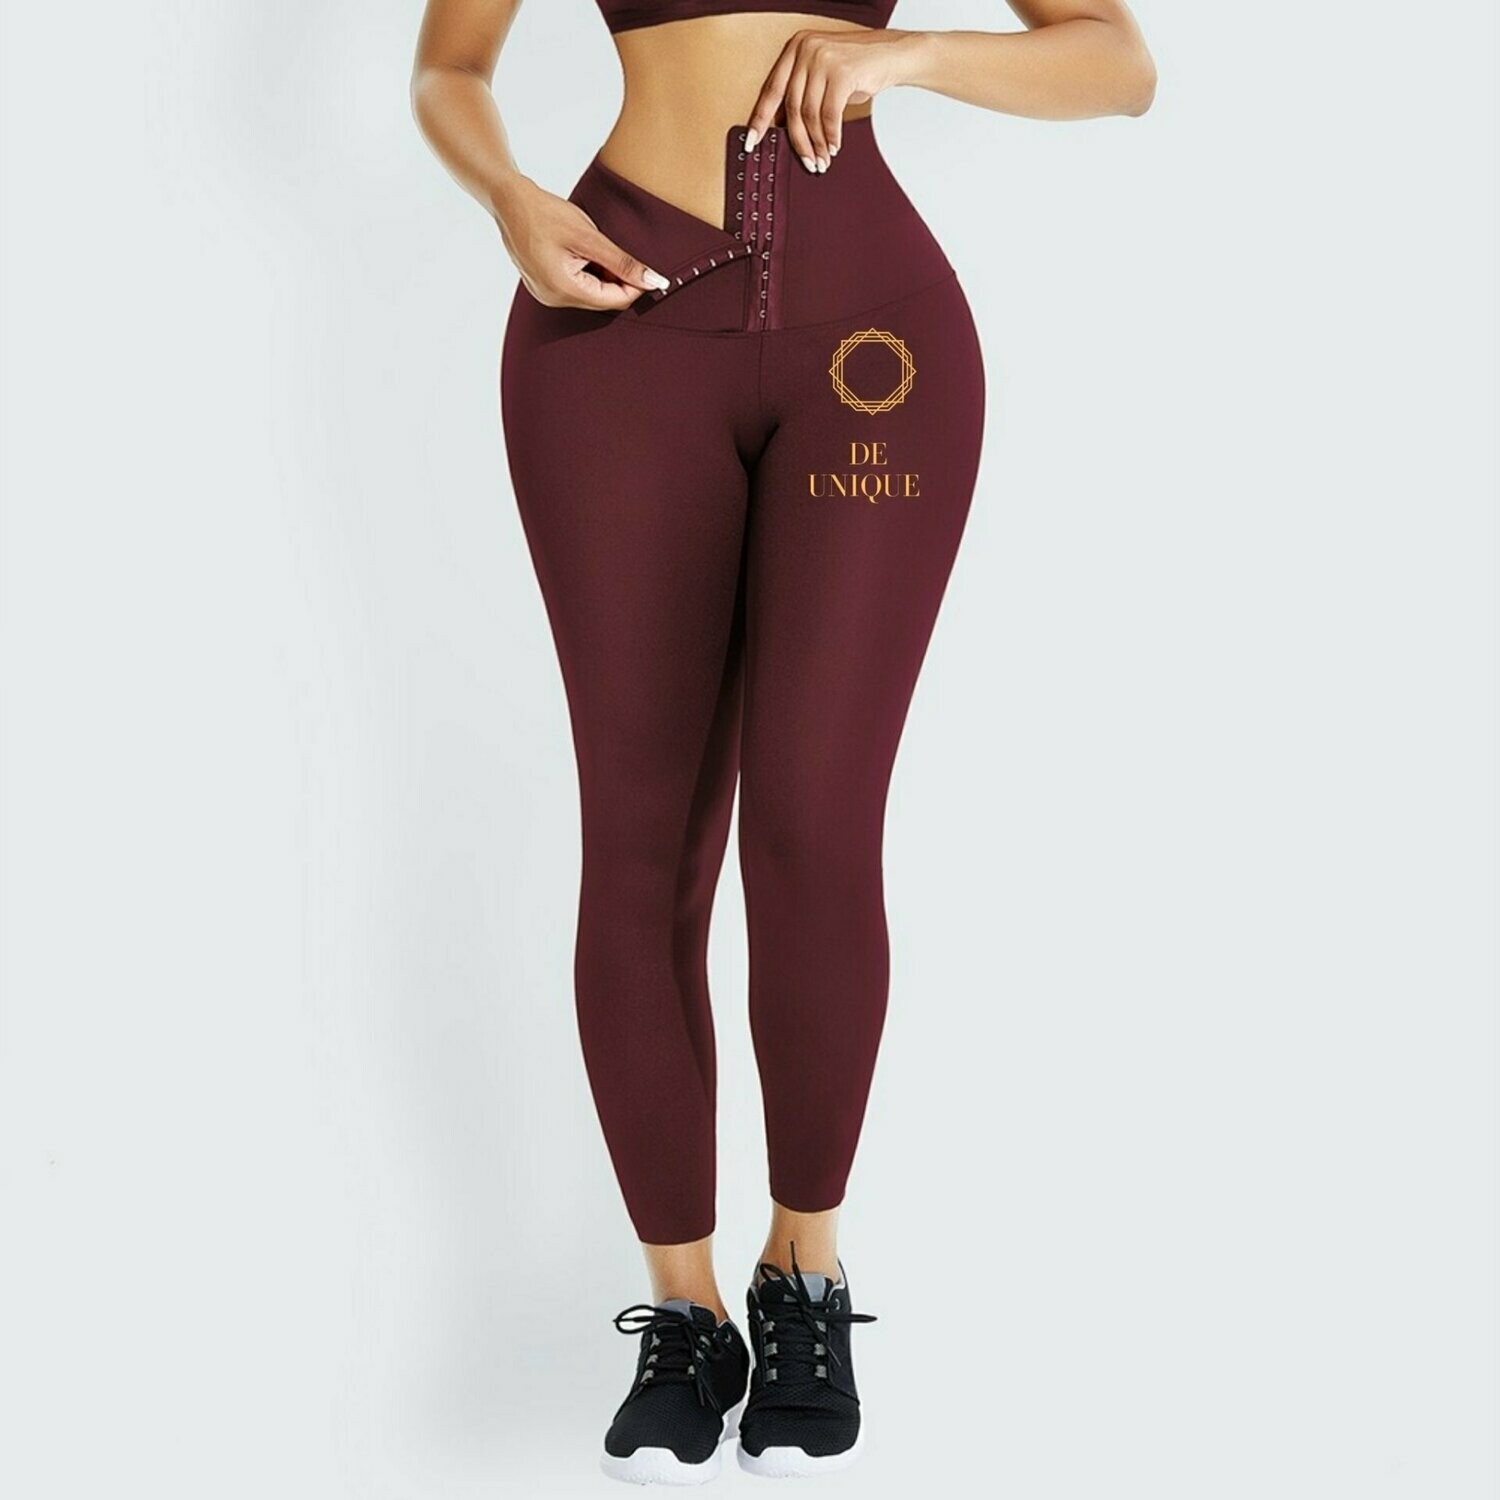 Burgundy/Red XLarge High waist trainer leggings